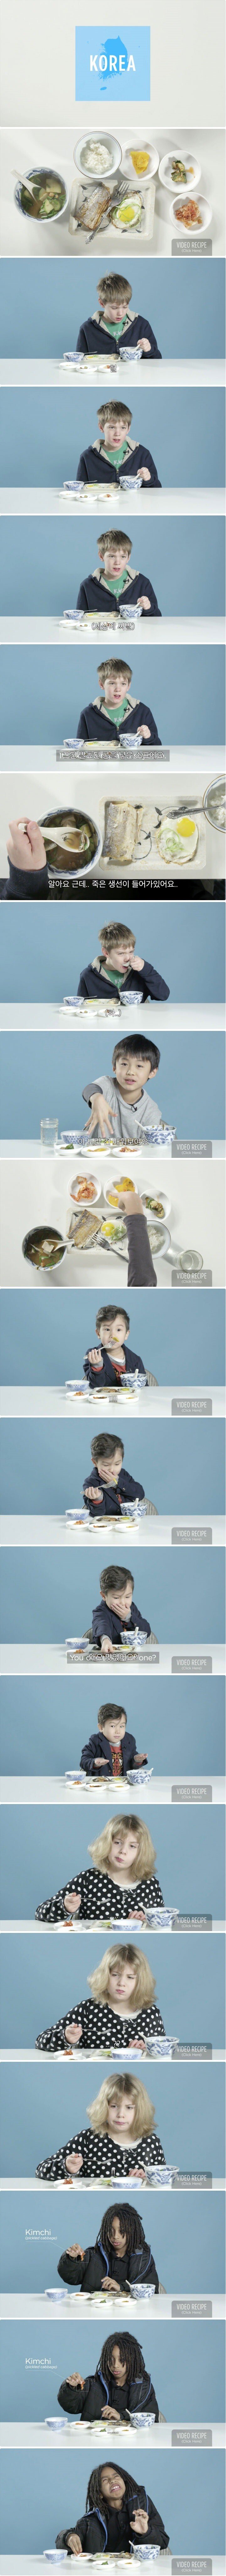 1.jpg 한국식 아침식사를 맛본 미국 어린이들 반응 . jpg